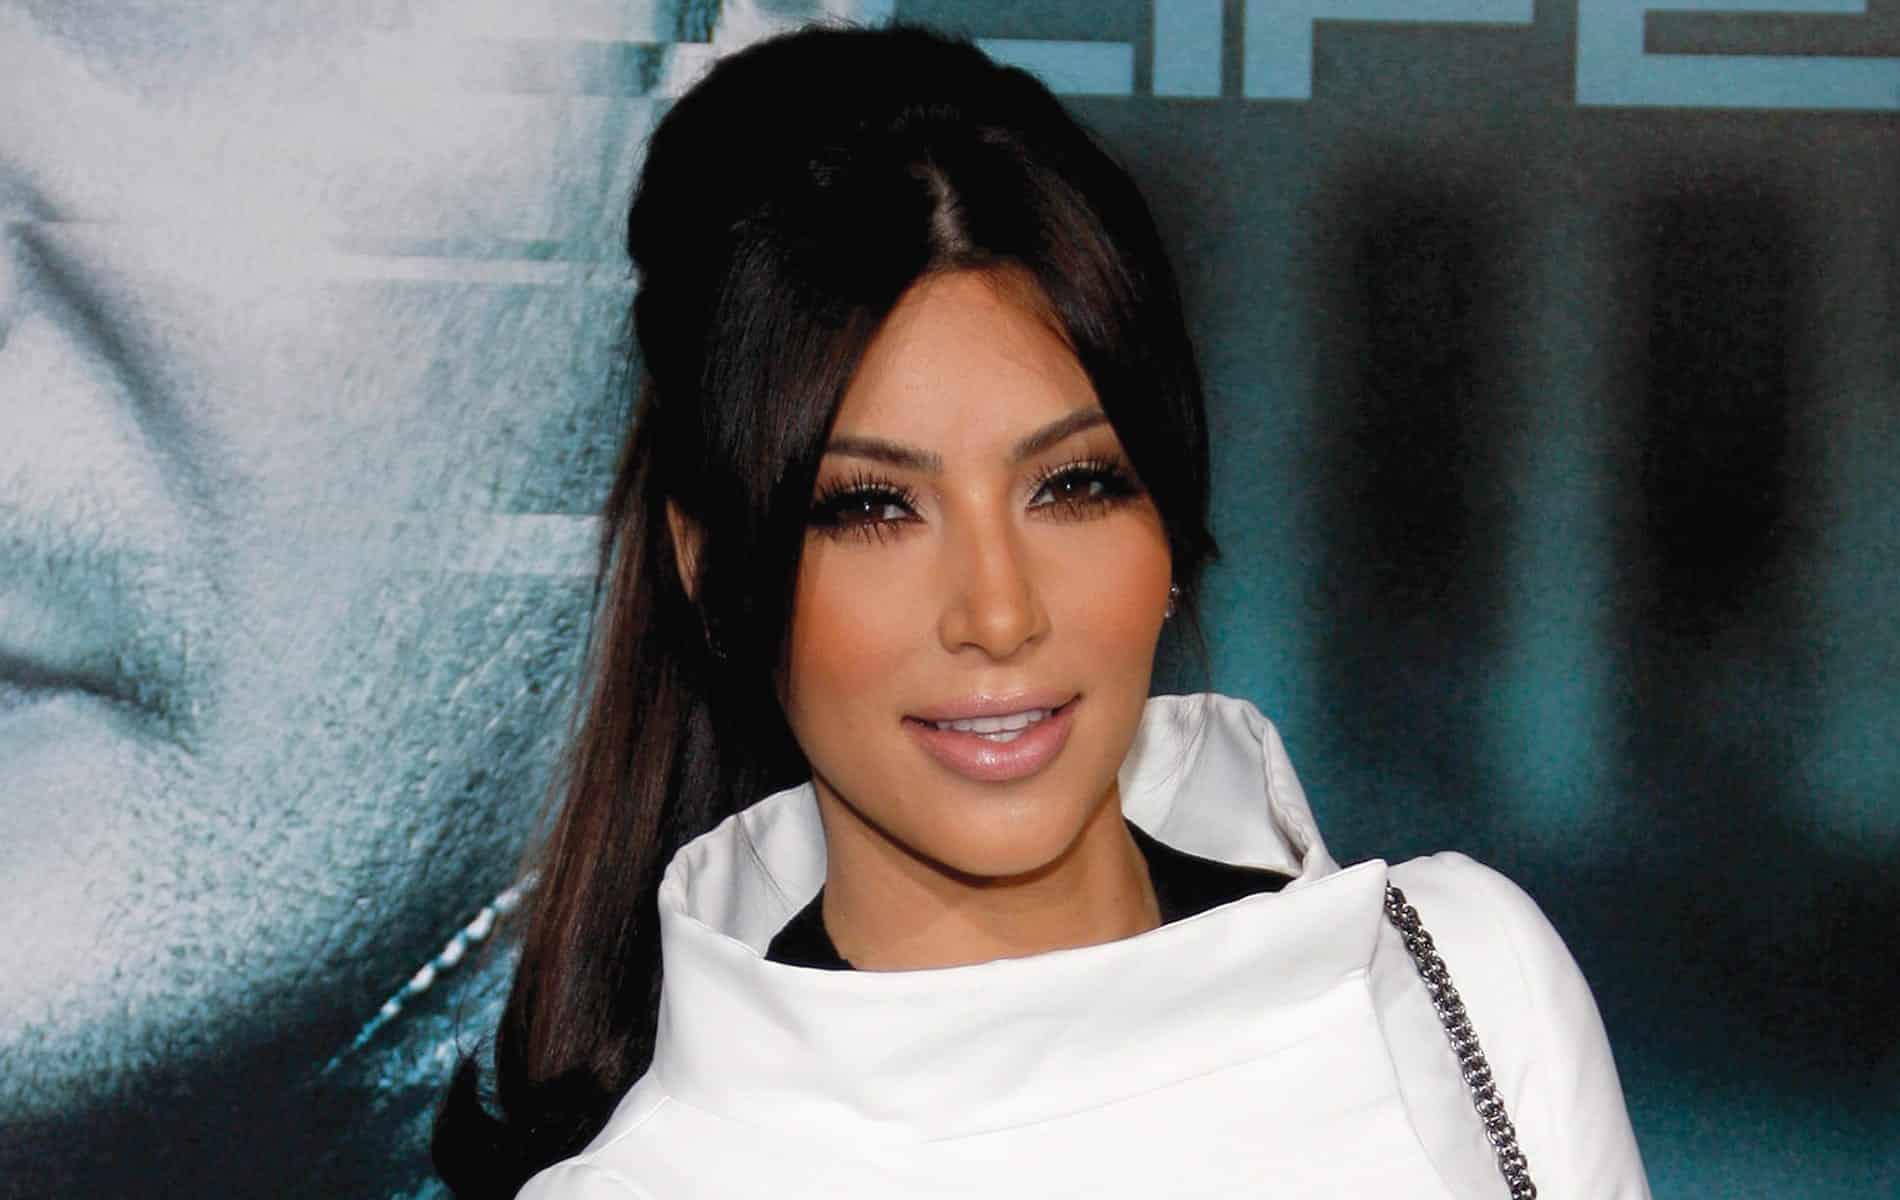 Le Monde Department Page VIE Magazine December 2019 Women's Issue, Kim Kardashian West